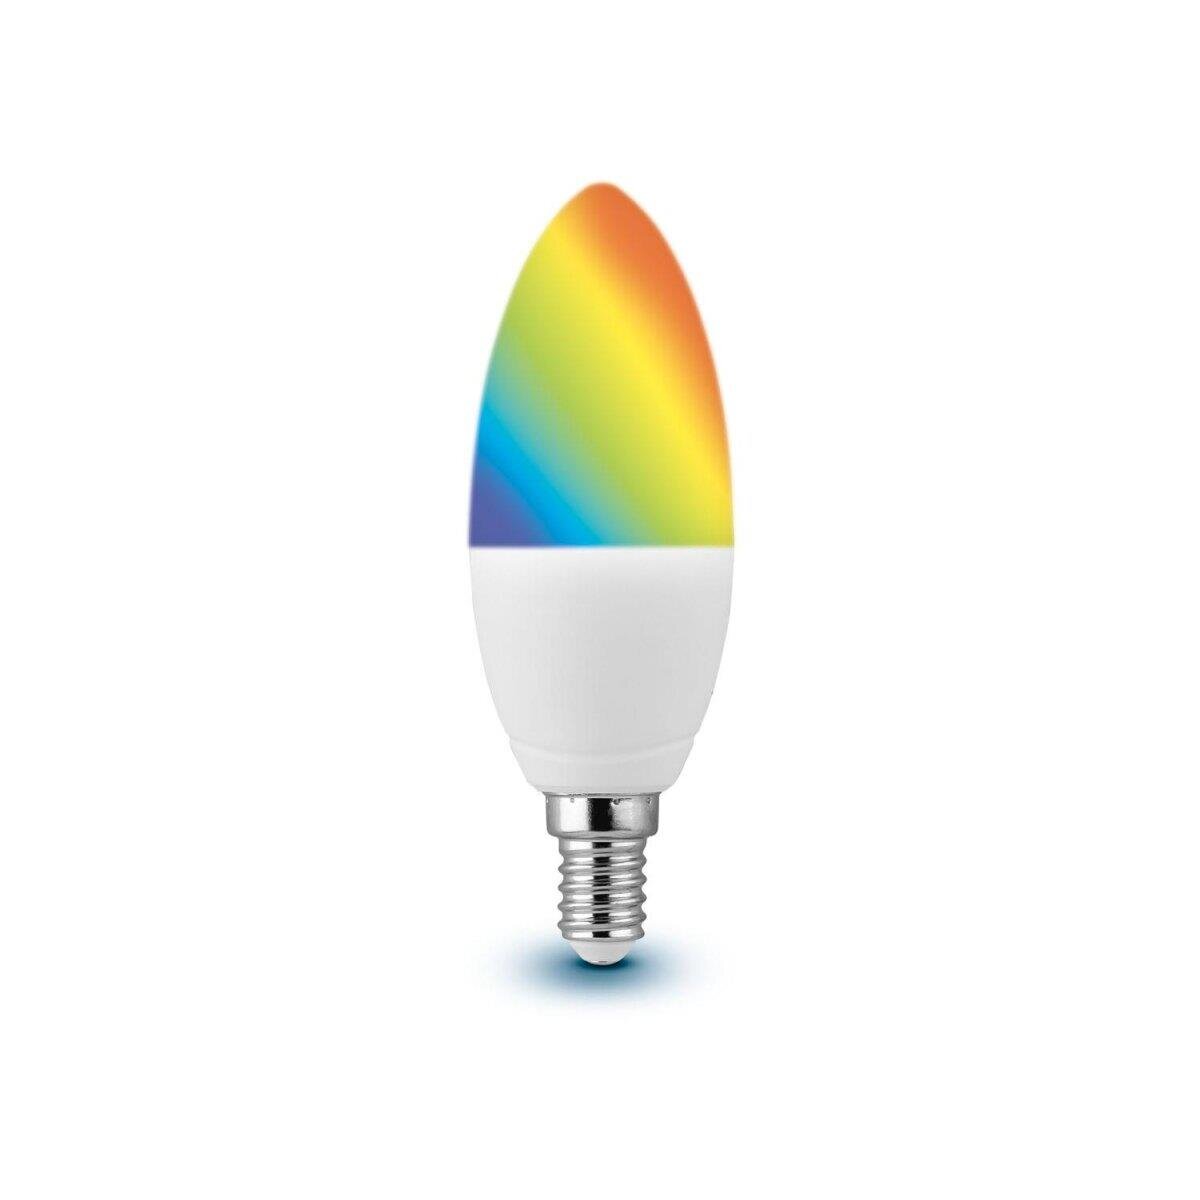 Livarno home RGB Zigbee LED Glühbirne Smart Home, Kerzenform - B-Ware  neuwertig, 8,49 €